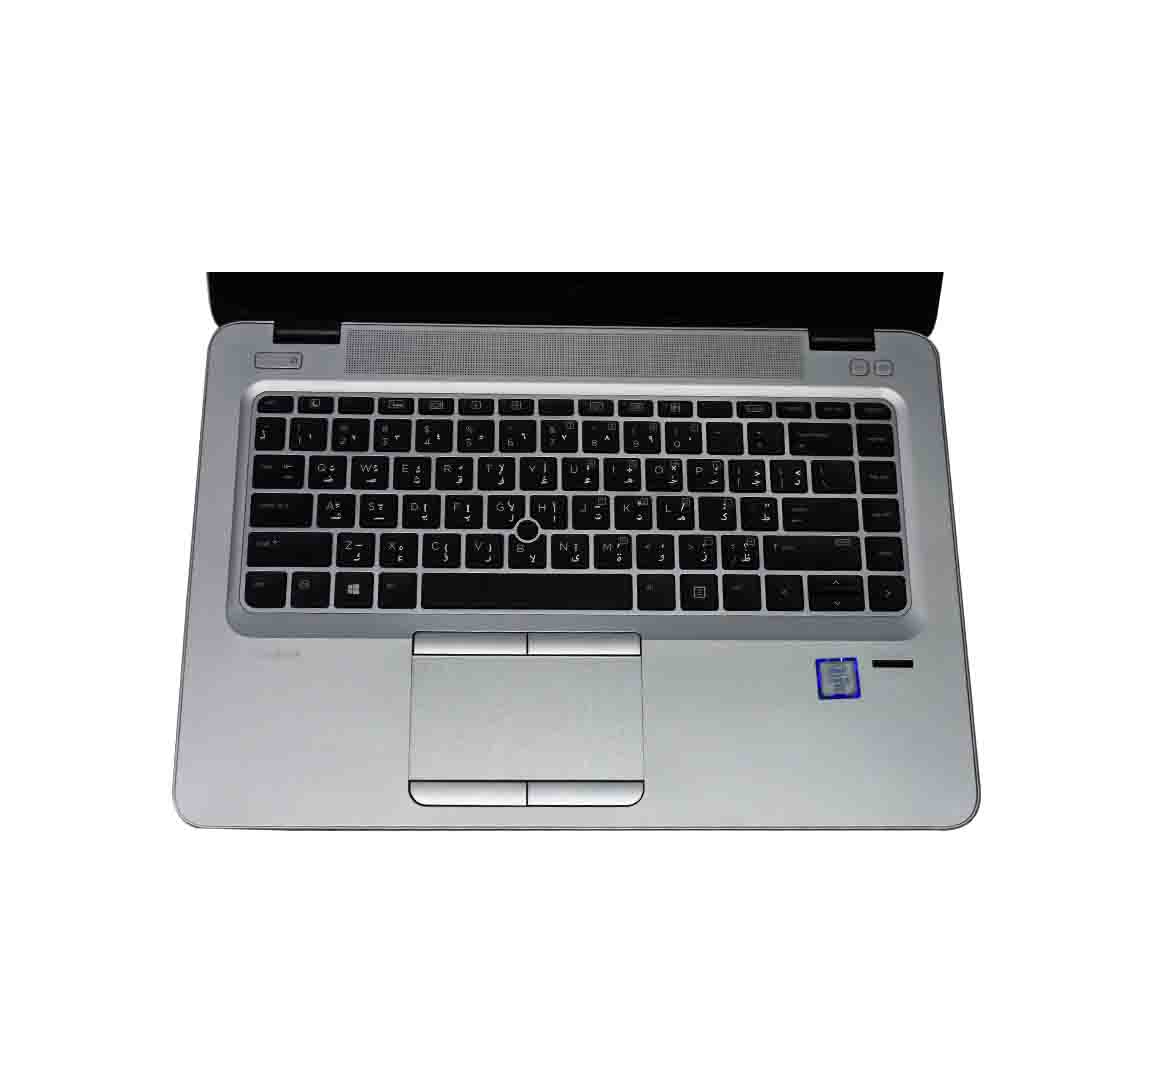 HP EliteBook 840 G3 Business Laptop, Intel Core i5-6th Generation CPU, 16GB RAM, 512GB SSD, 14 inch Display, Windows 10 Pro